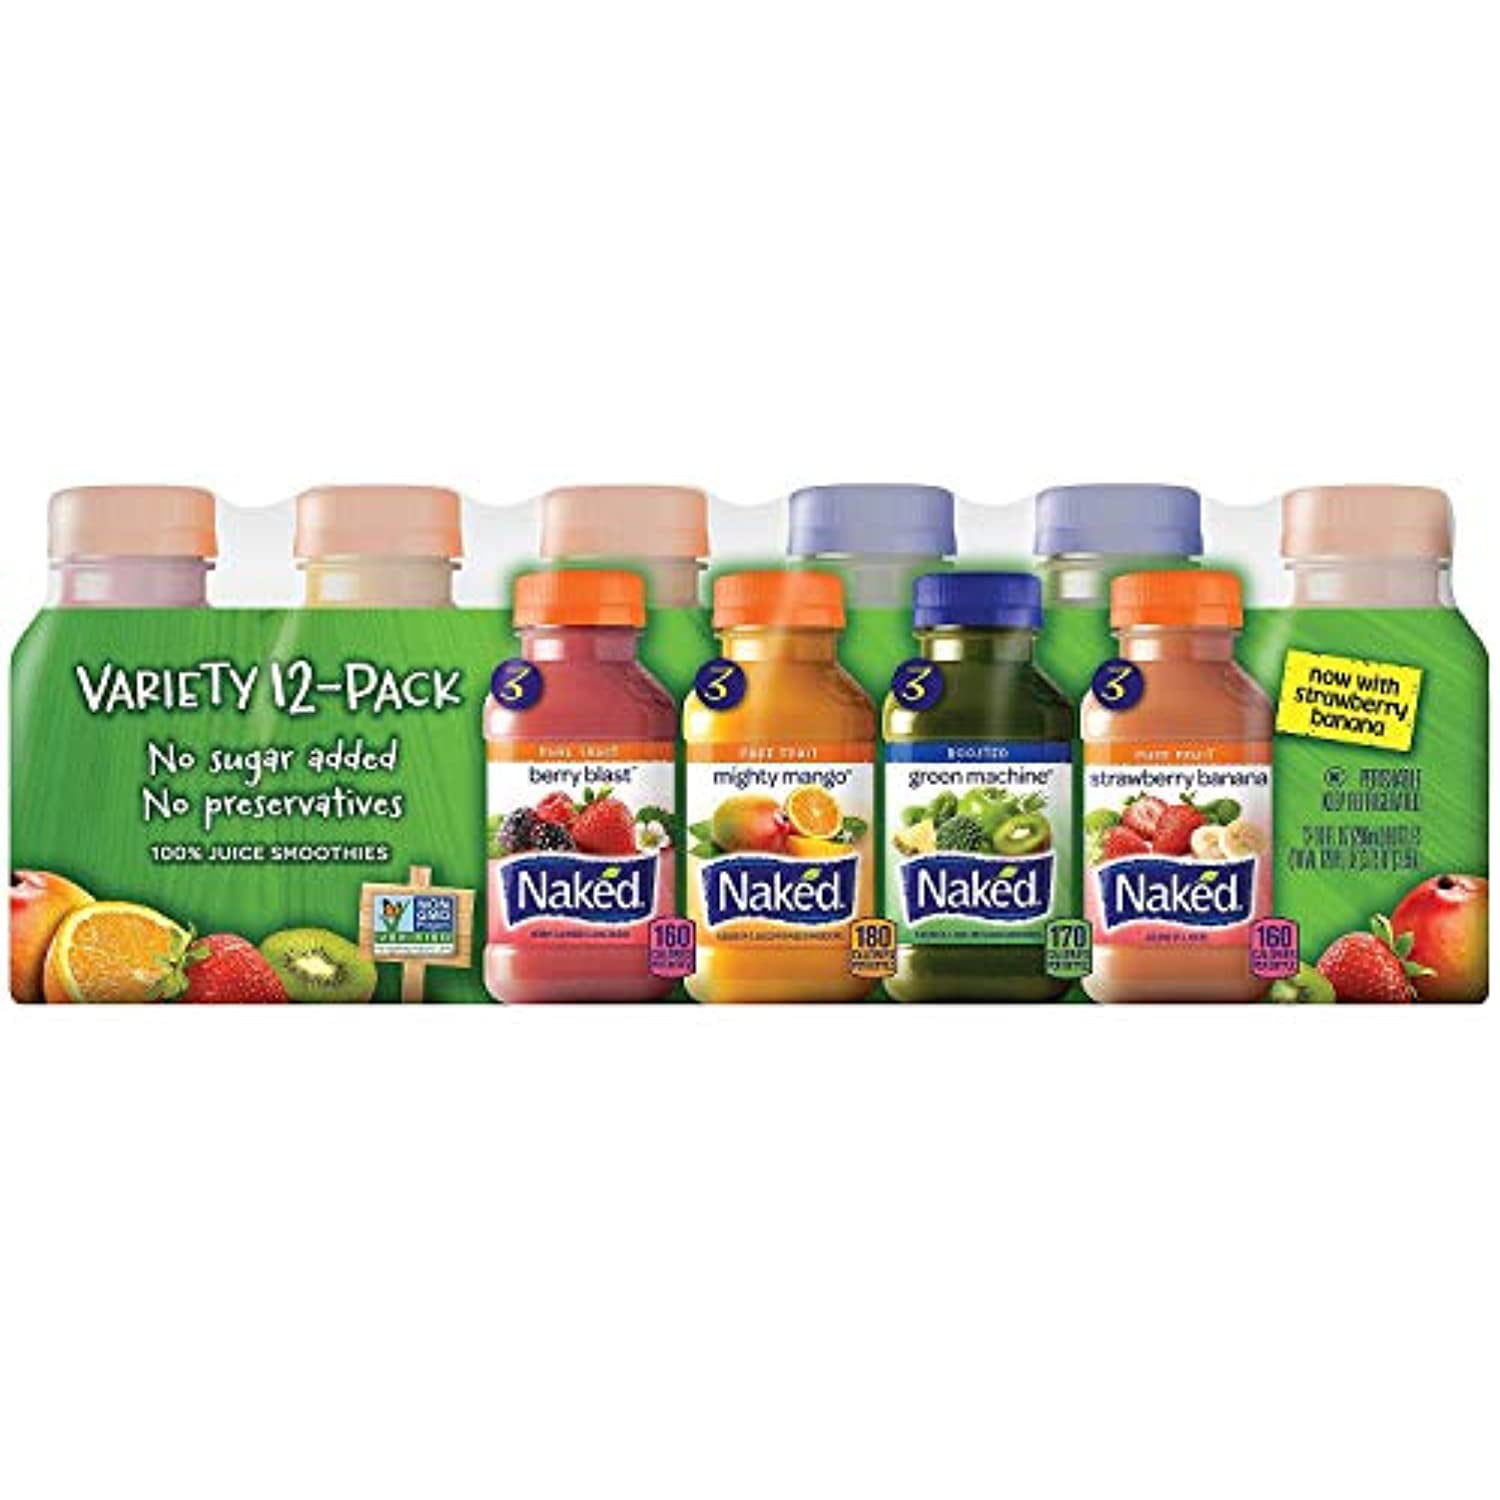 Naked Juice Variety Pack (10 oz., 12 ct.) (pack of 2 